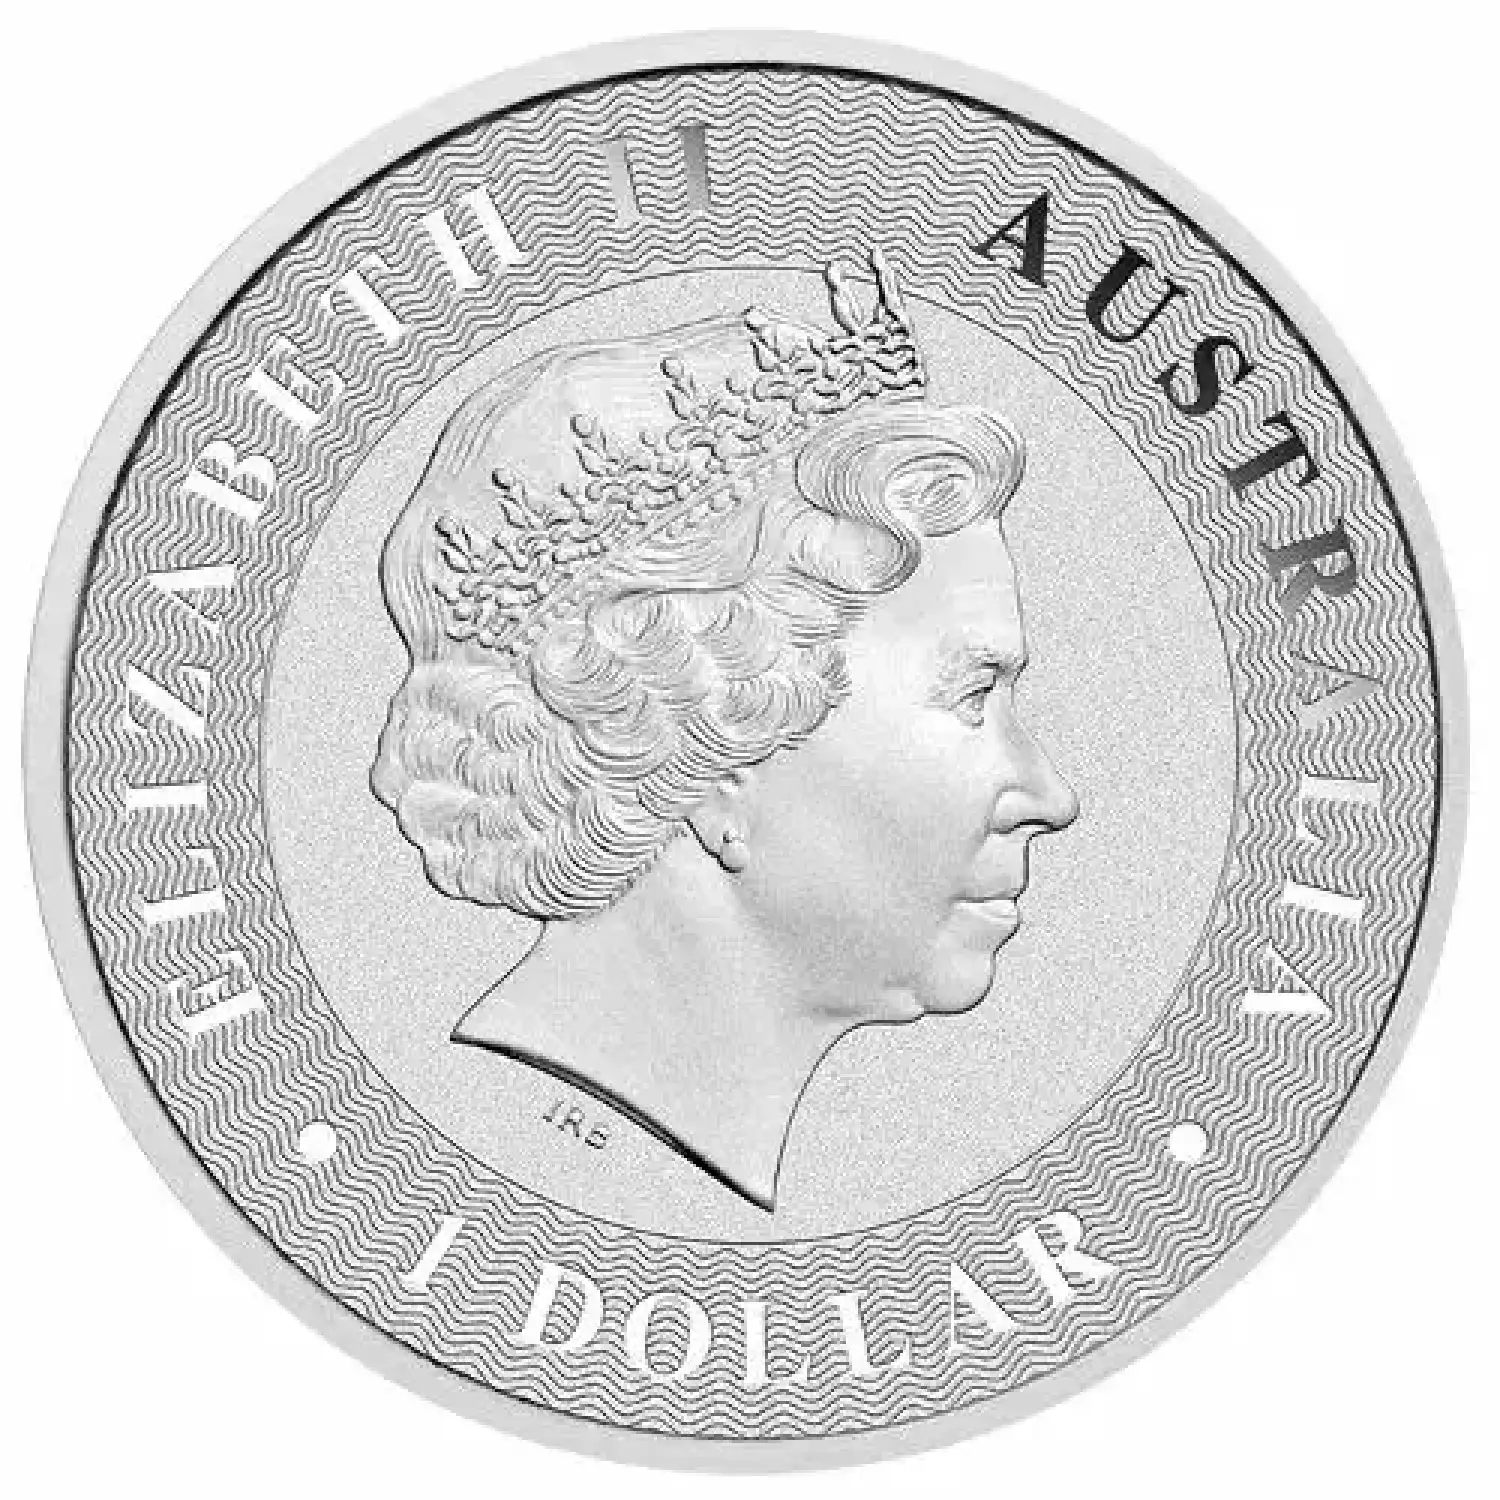 2016 1oz Silver Kangaroo - Royal Australian Mint (2)